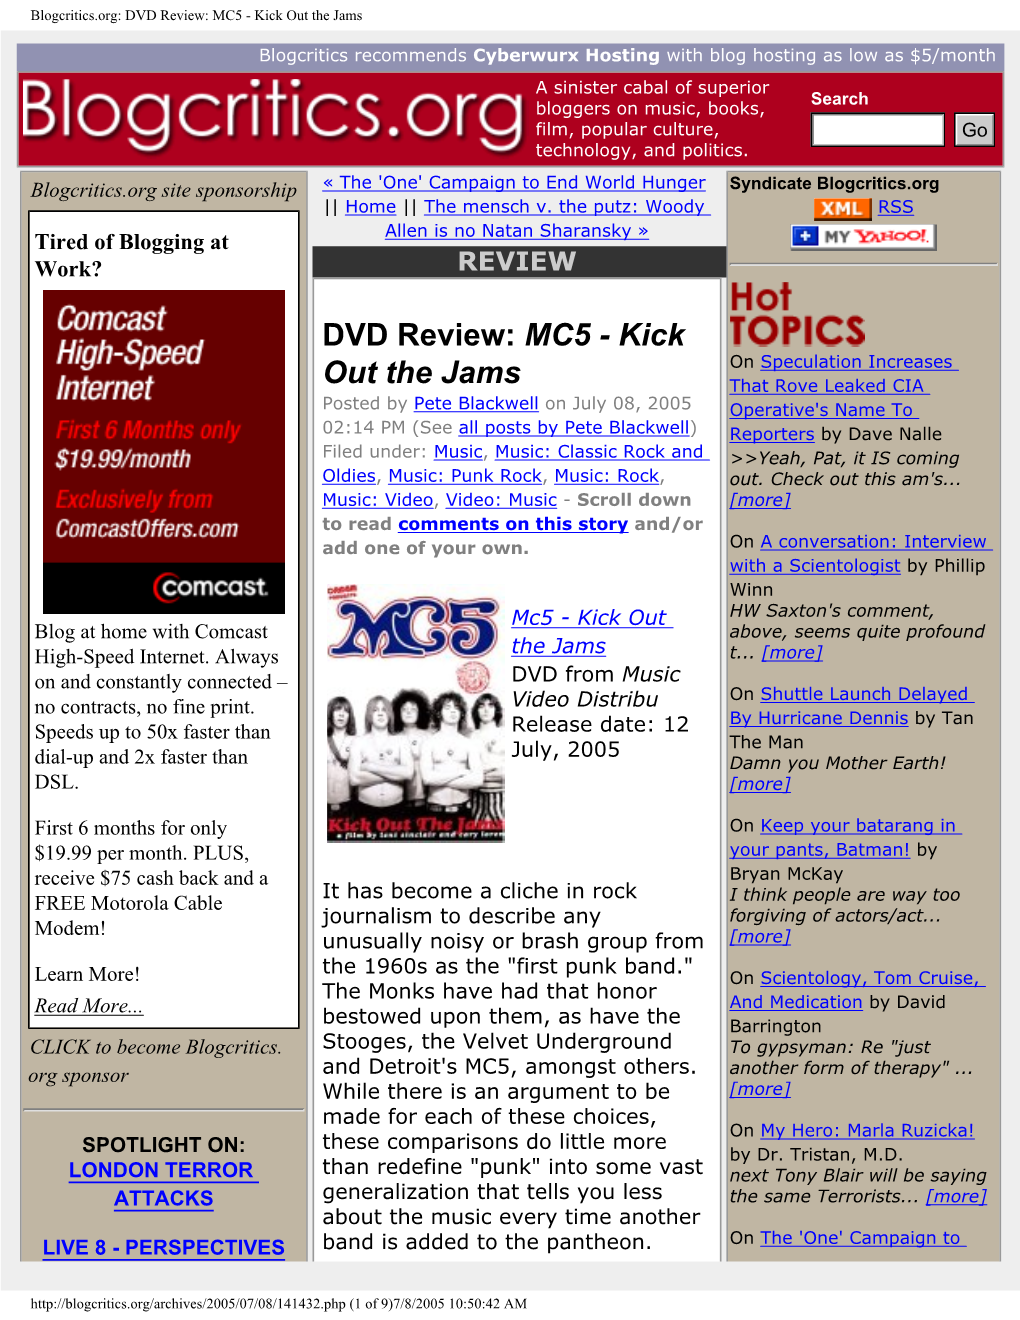 Blogcritics.Org: DVD Review: MC5 - Kick out the Jams